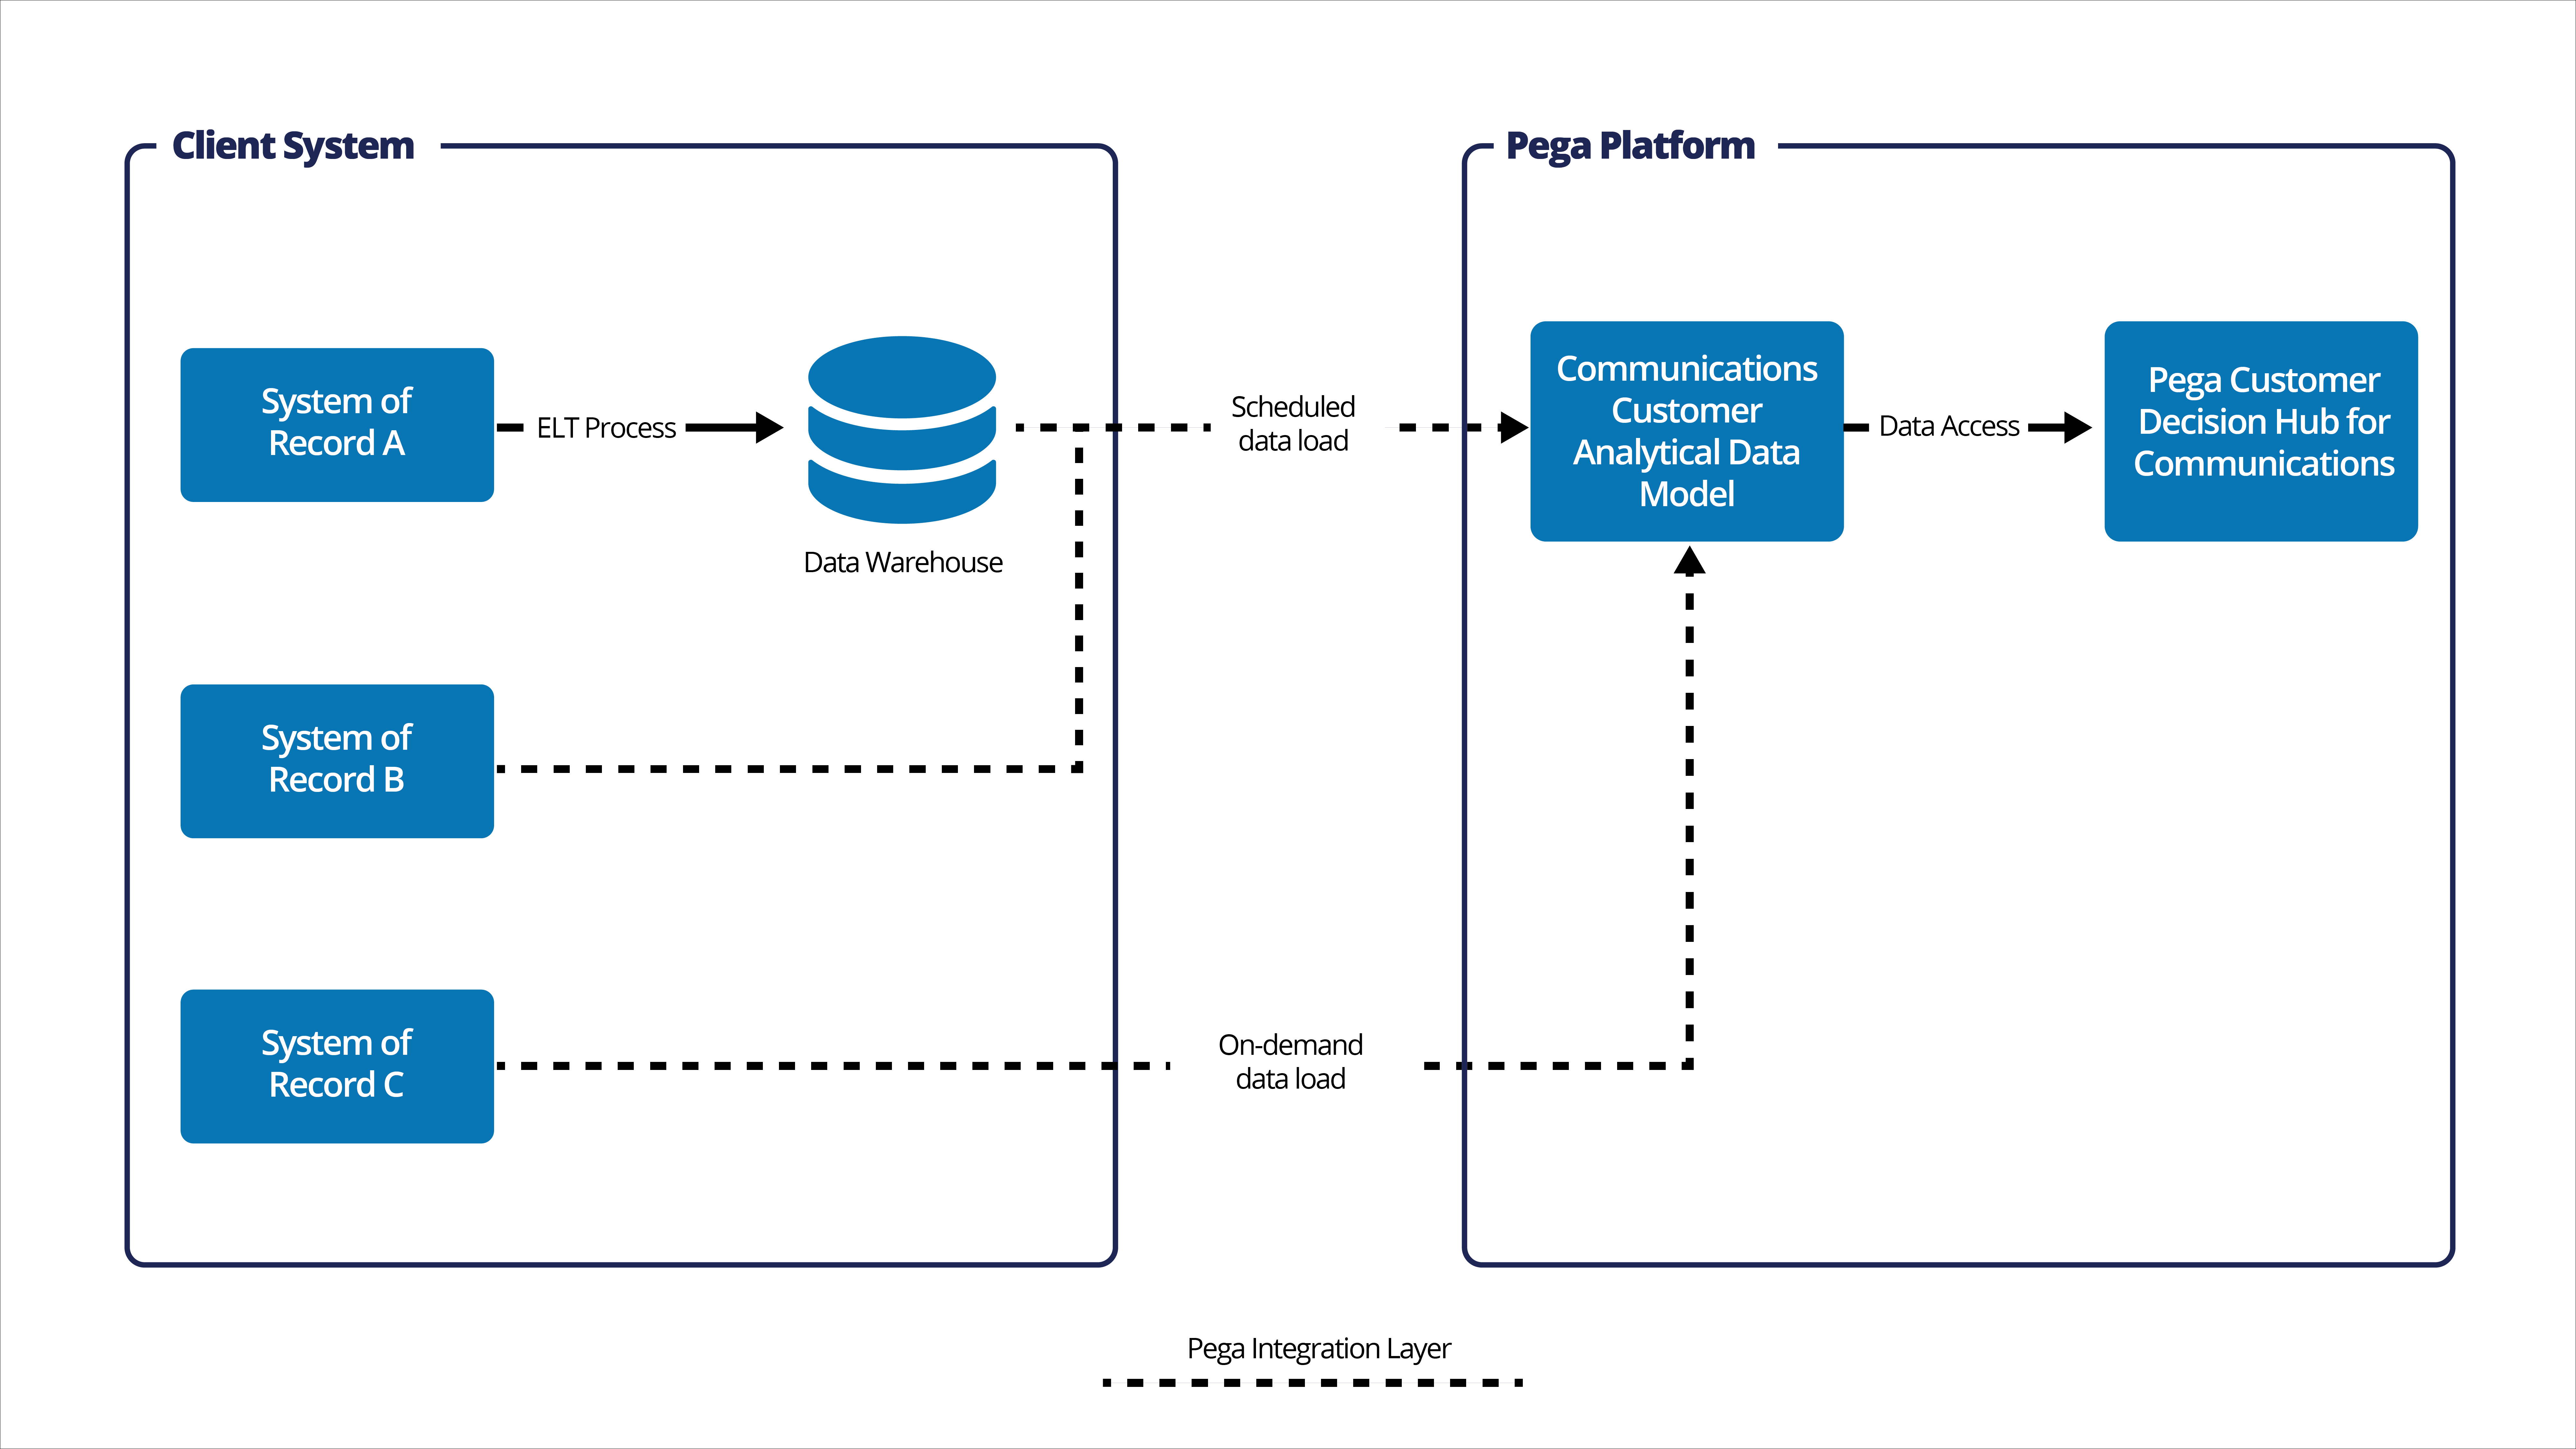 Pega Customer Decision Hub for Communications integration data layer